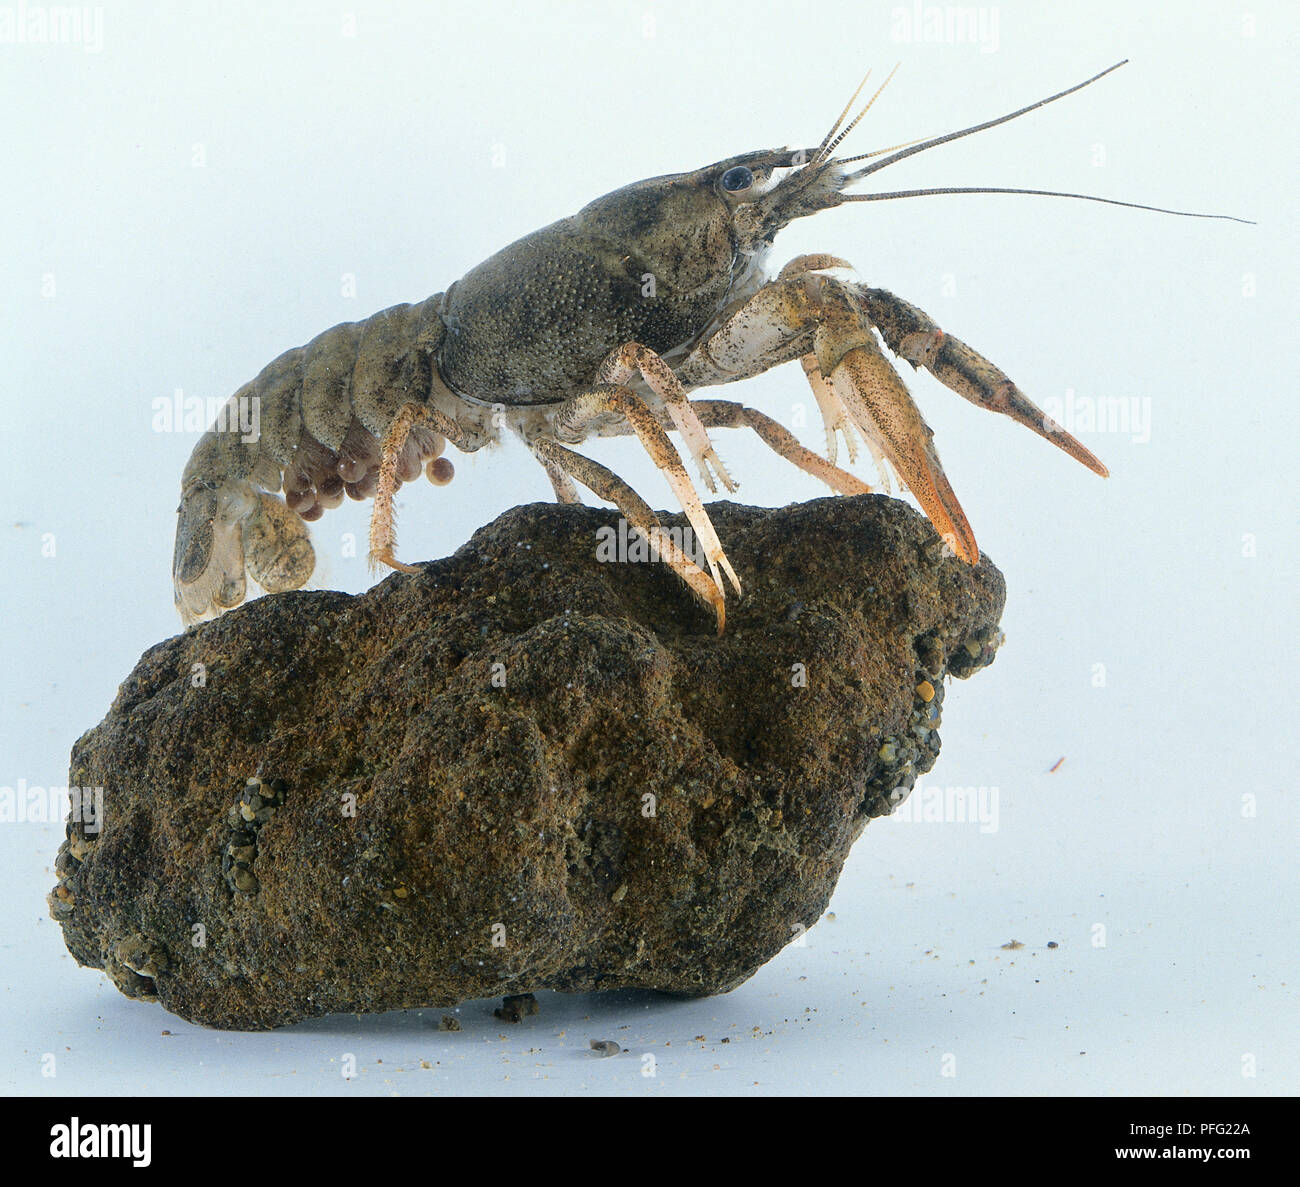 Crayfish on a rock. Stock Photo